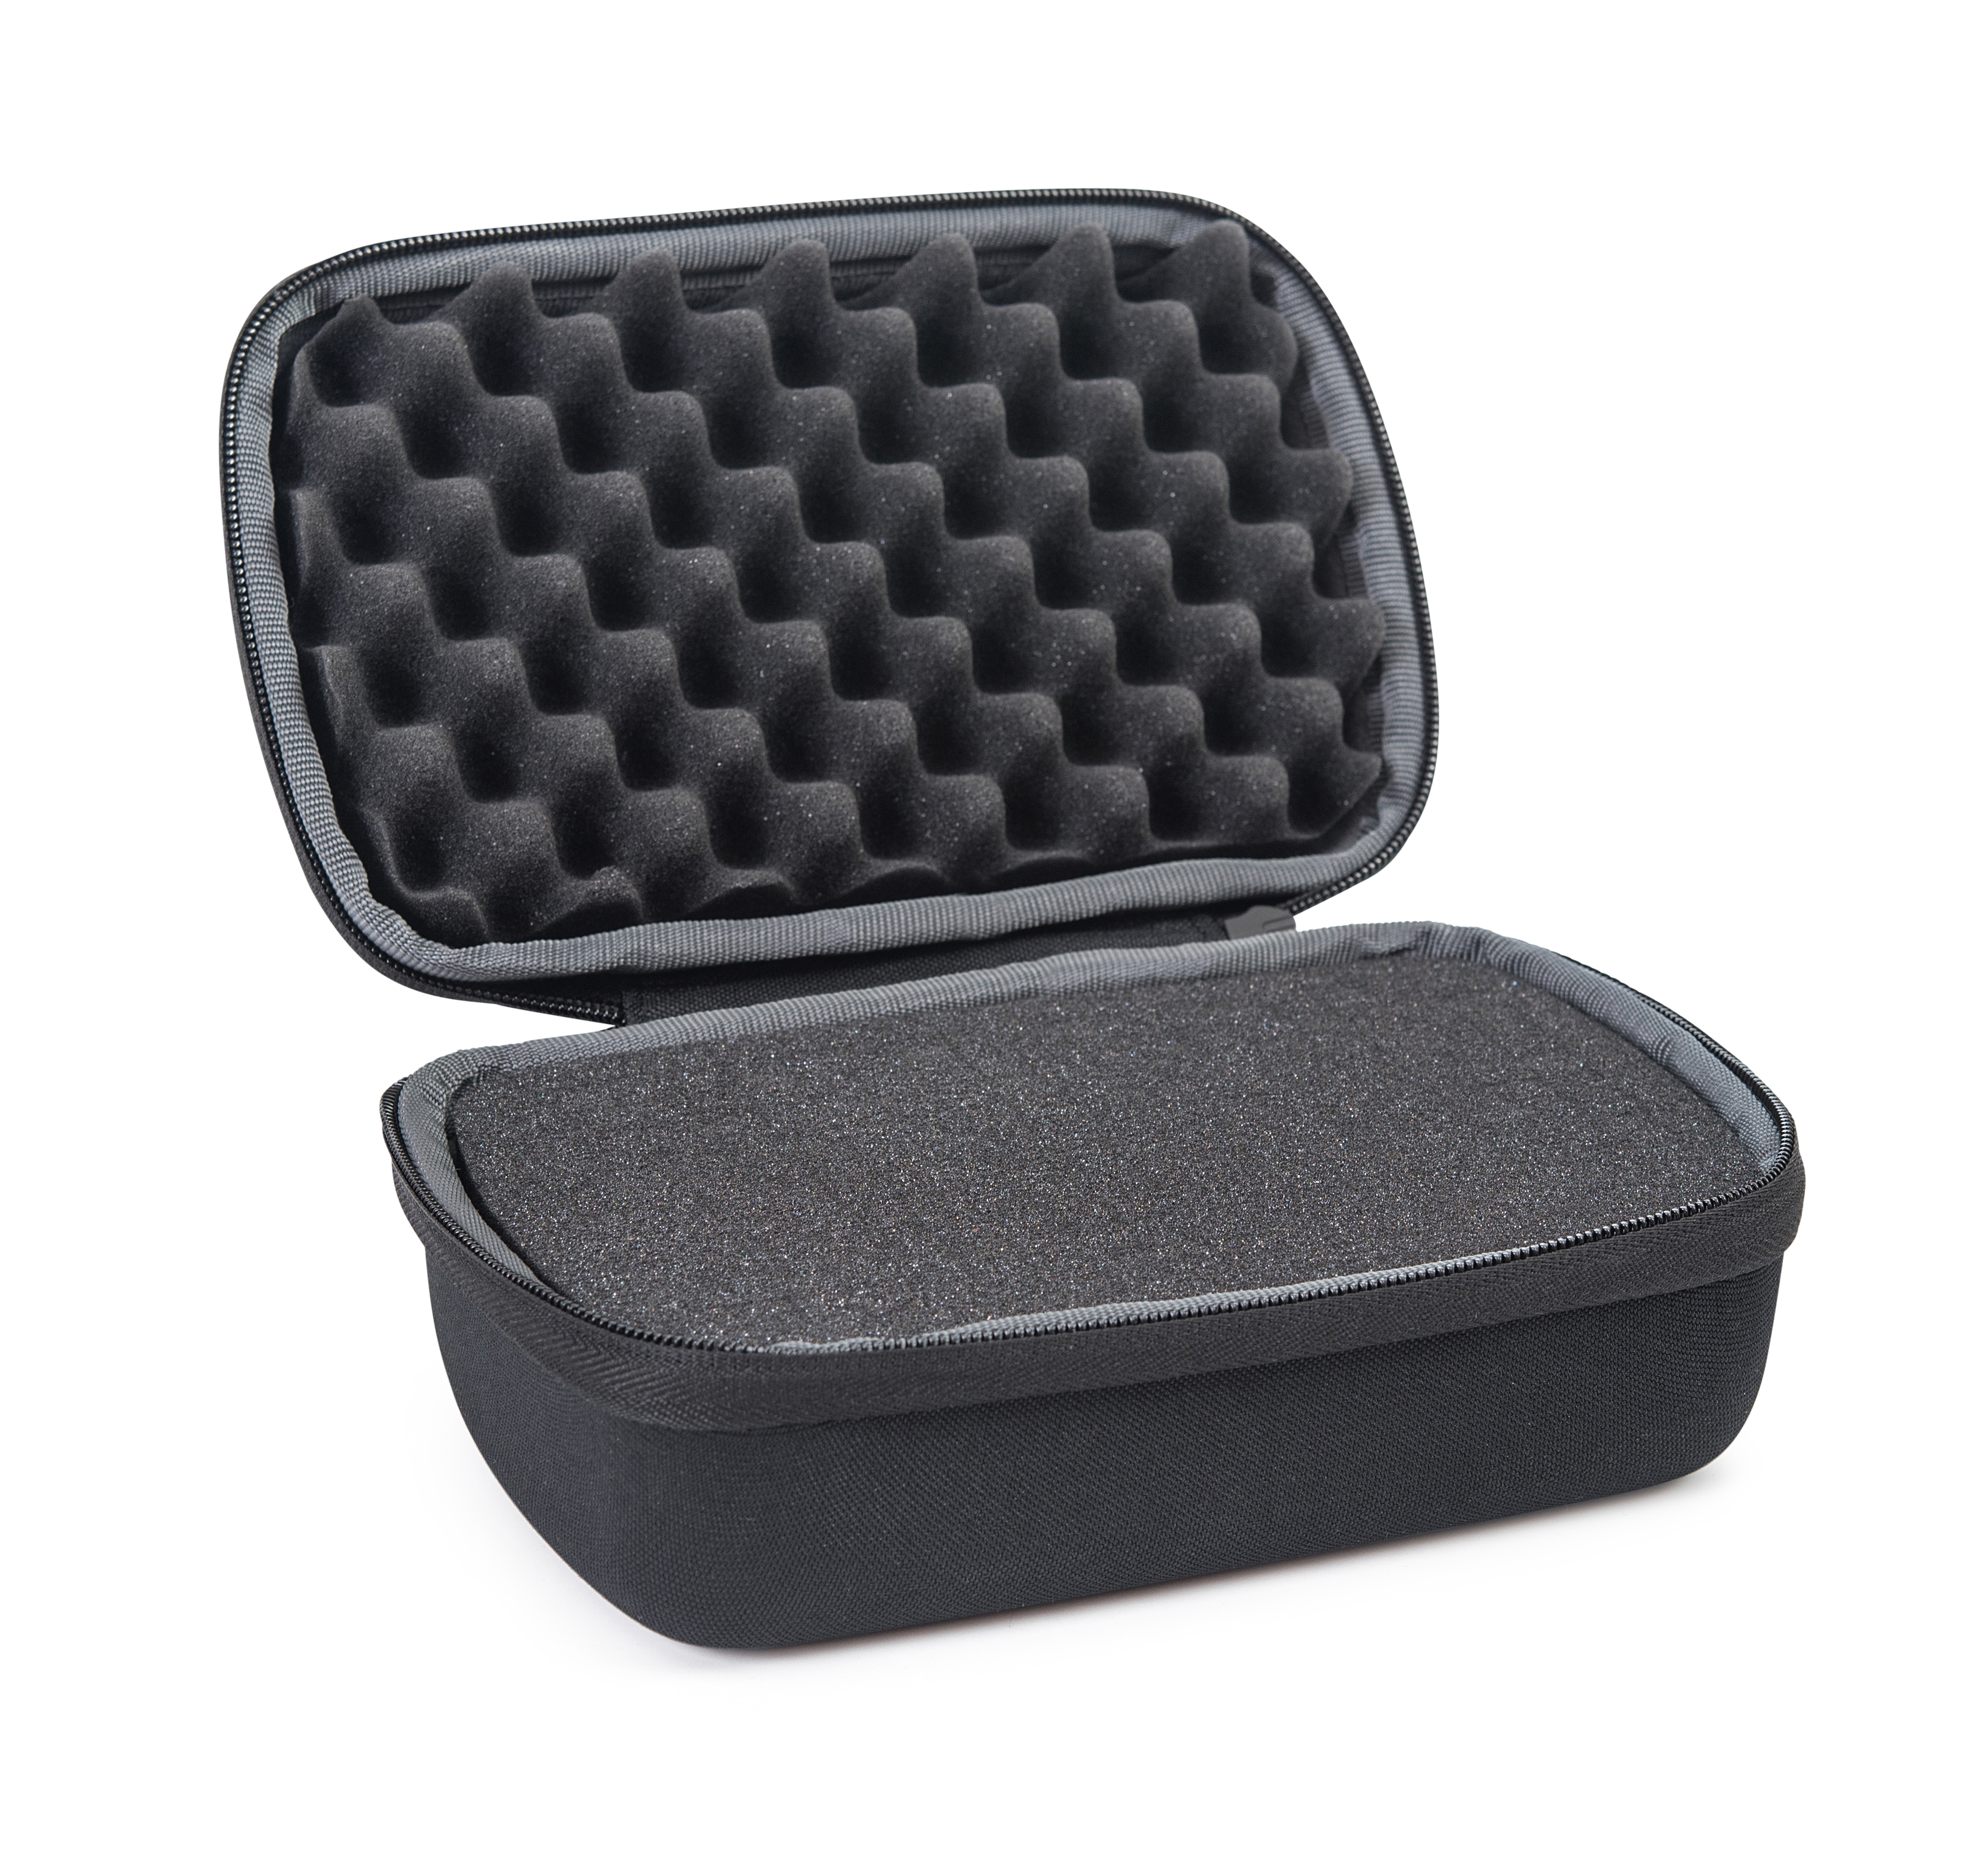 Case STA-300-1/B12 - Black - Precubed foam in the bottom and egg foam in the lid